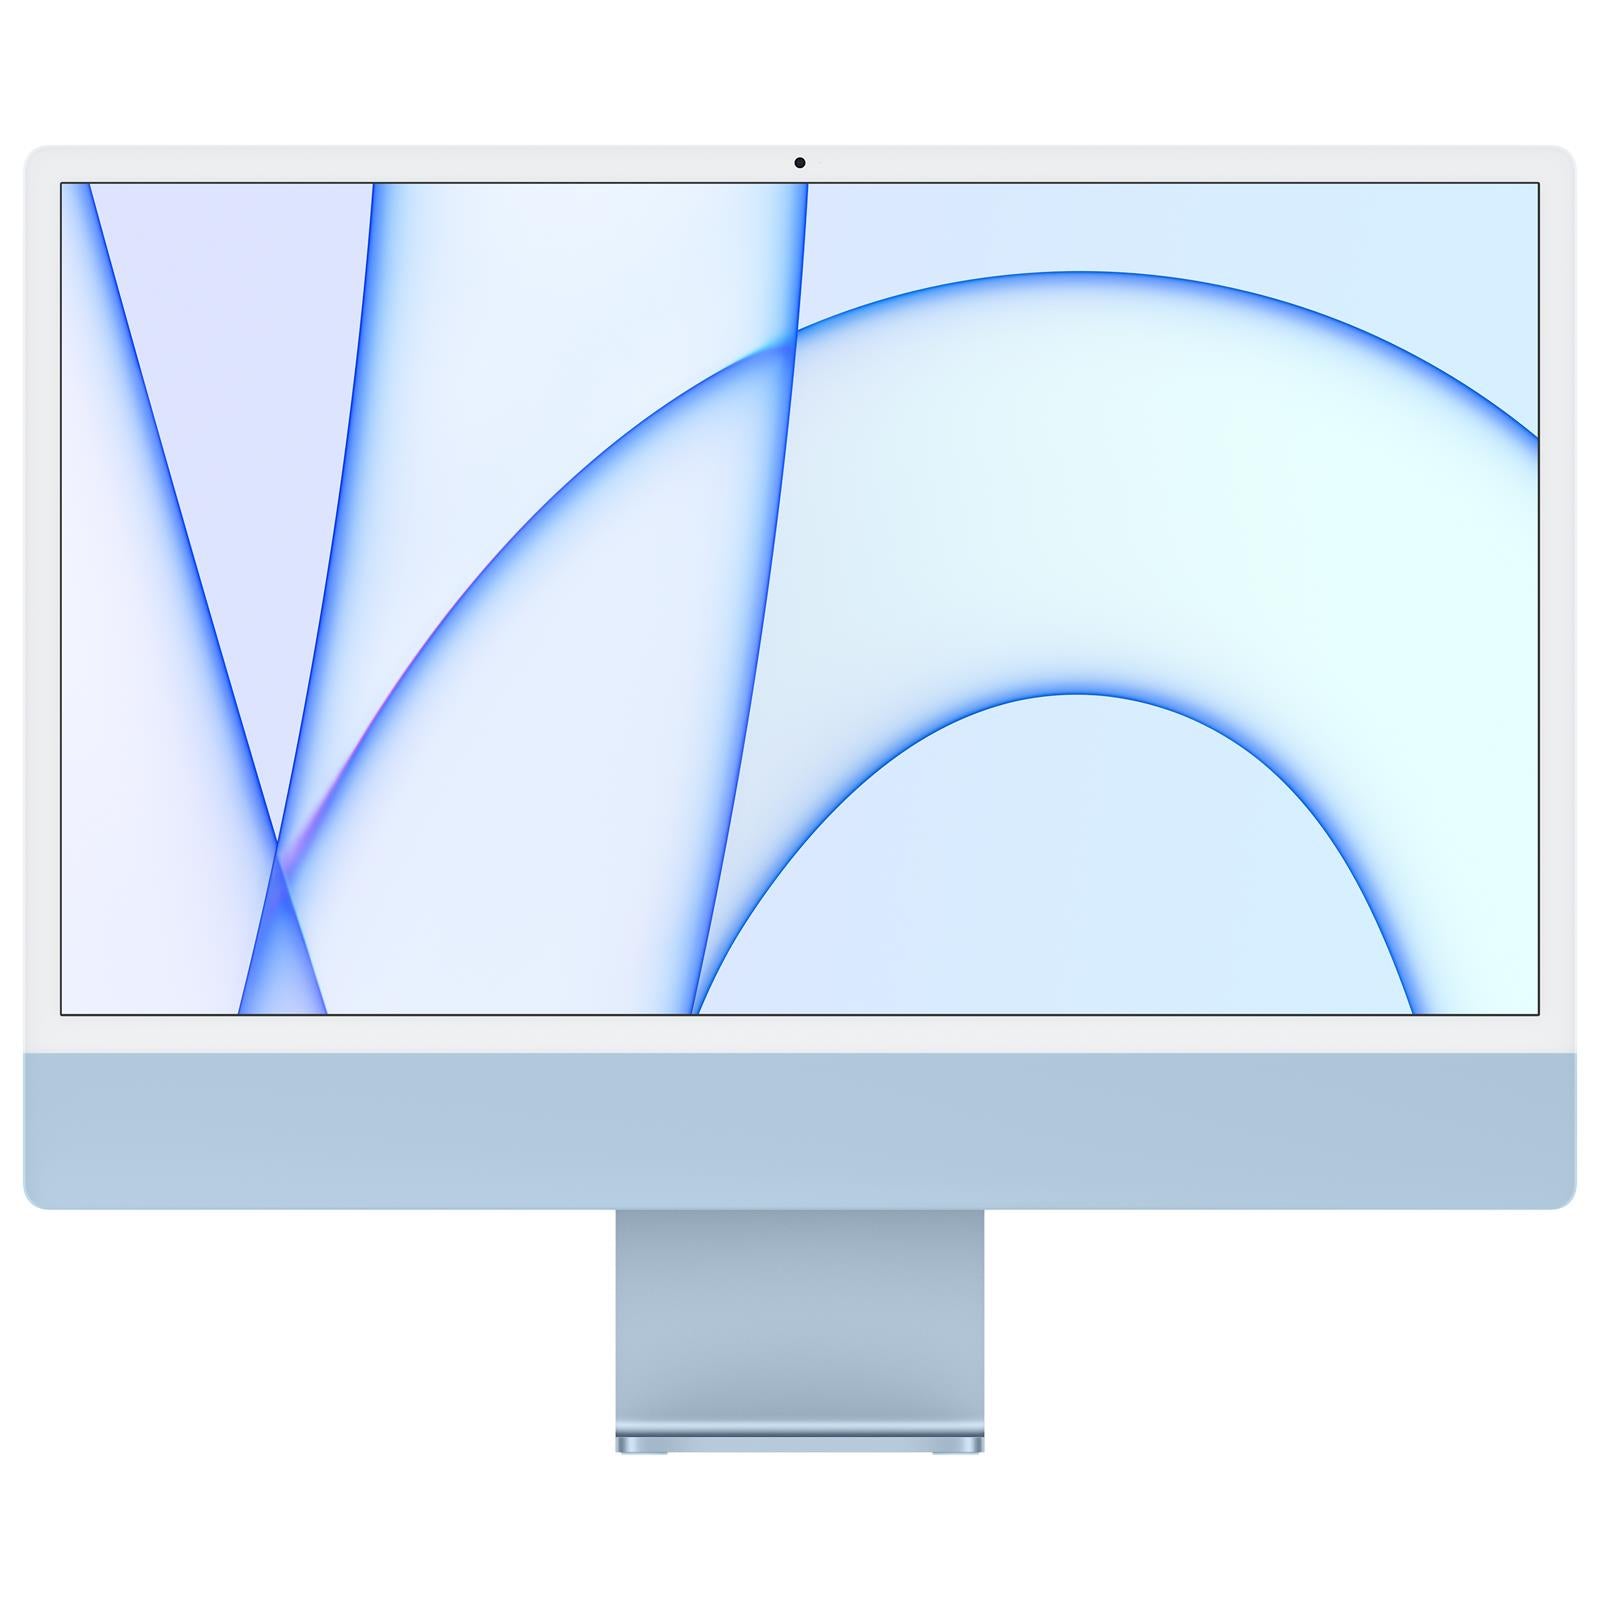 Roblox Logo, Studio, MacOS, Blue, Text, Technology, Line, Area